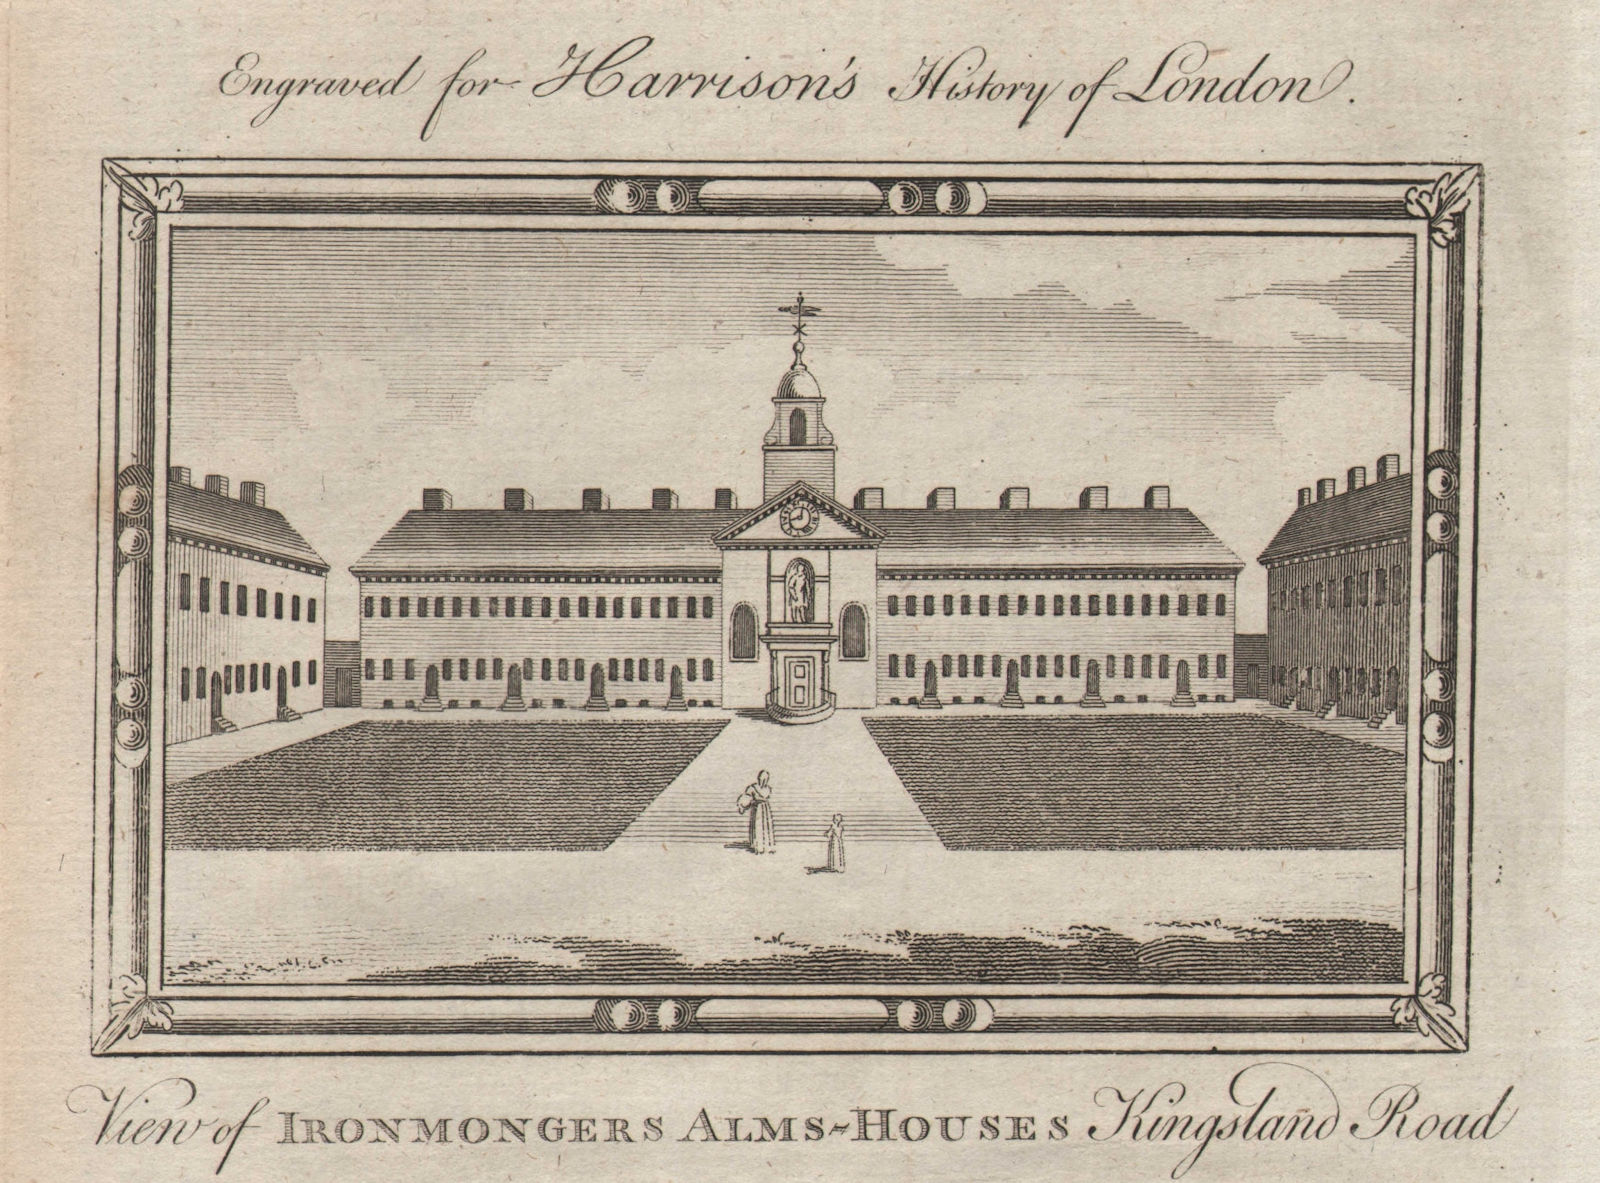 "Ironmongers Almshouses, Kingsland Road", now the Geffrye Museum. HARRISON 1776